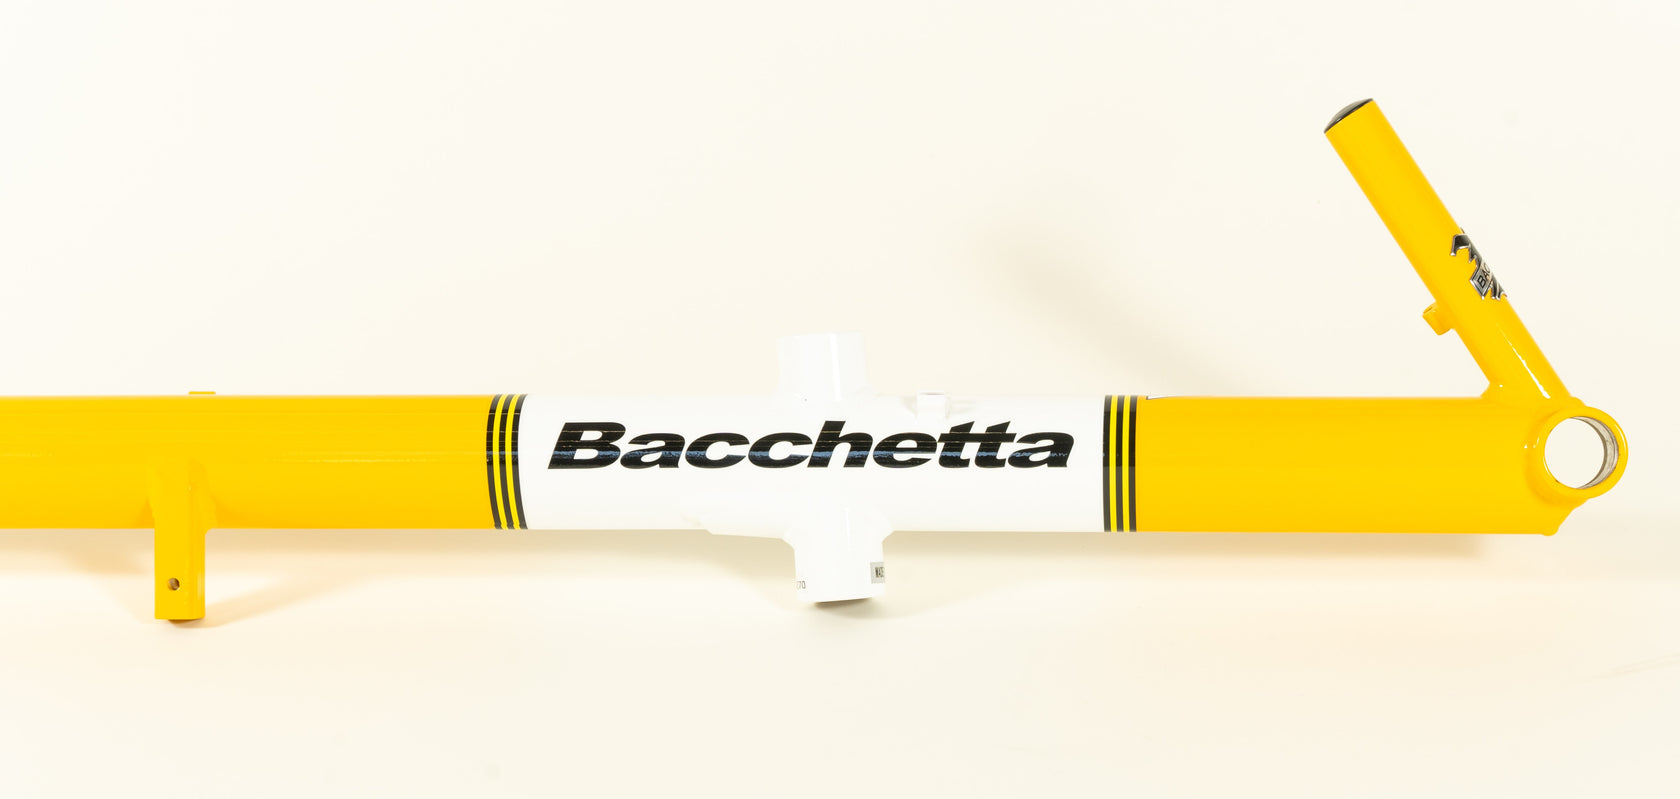 bacchetta frame yellow and white